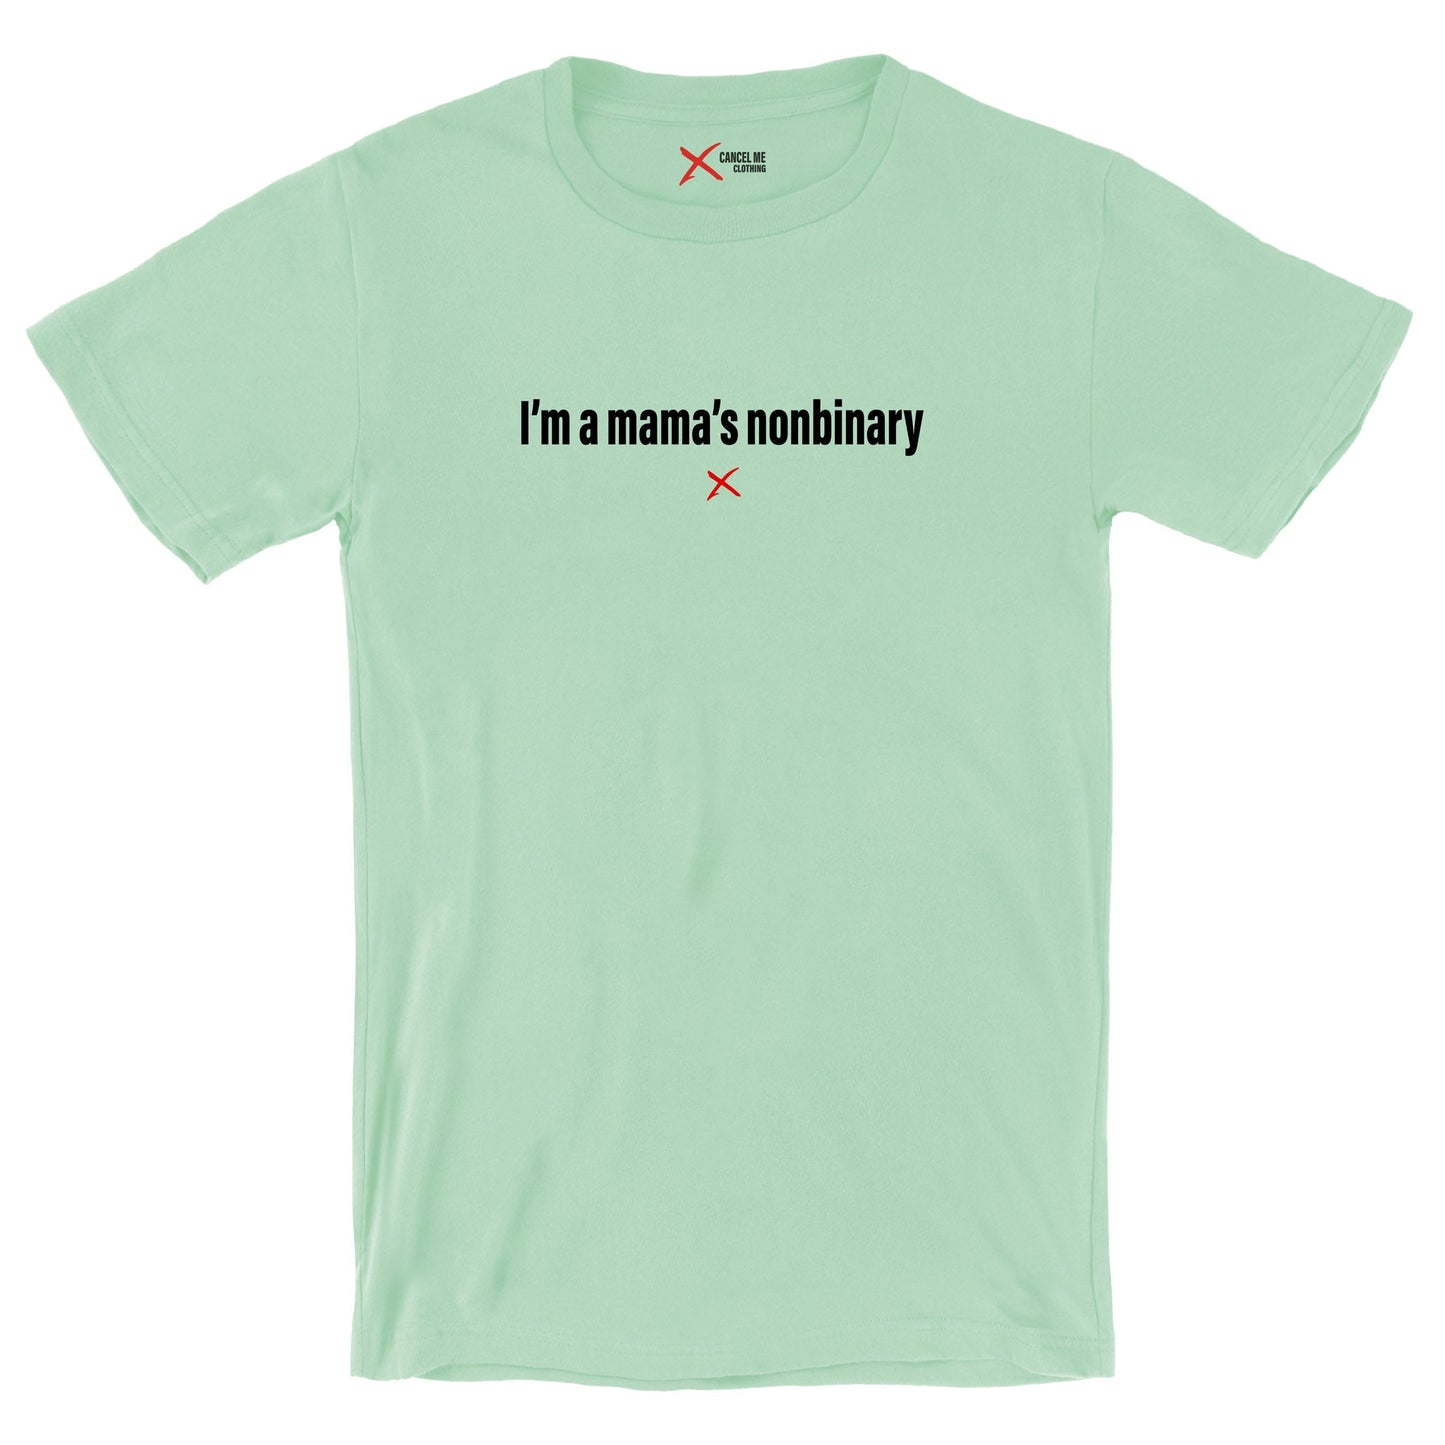 I'm a mama's nonbinary - Shirt